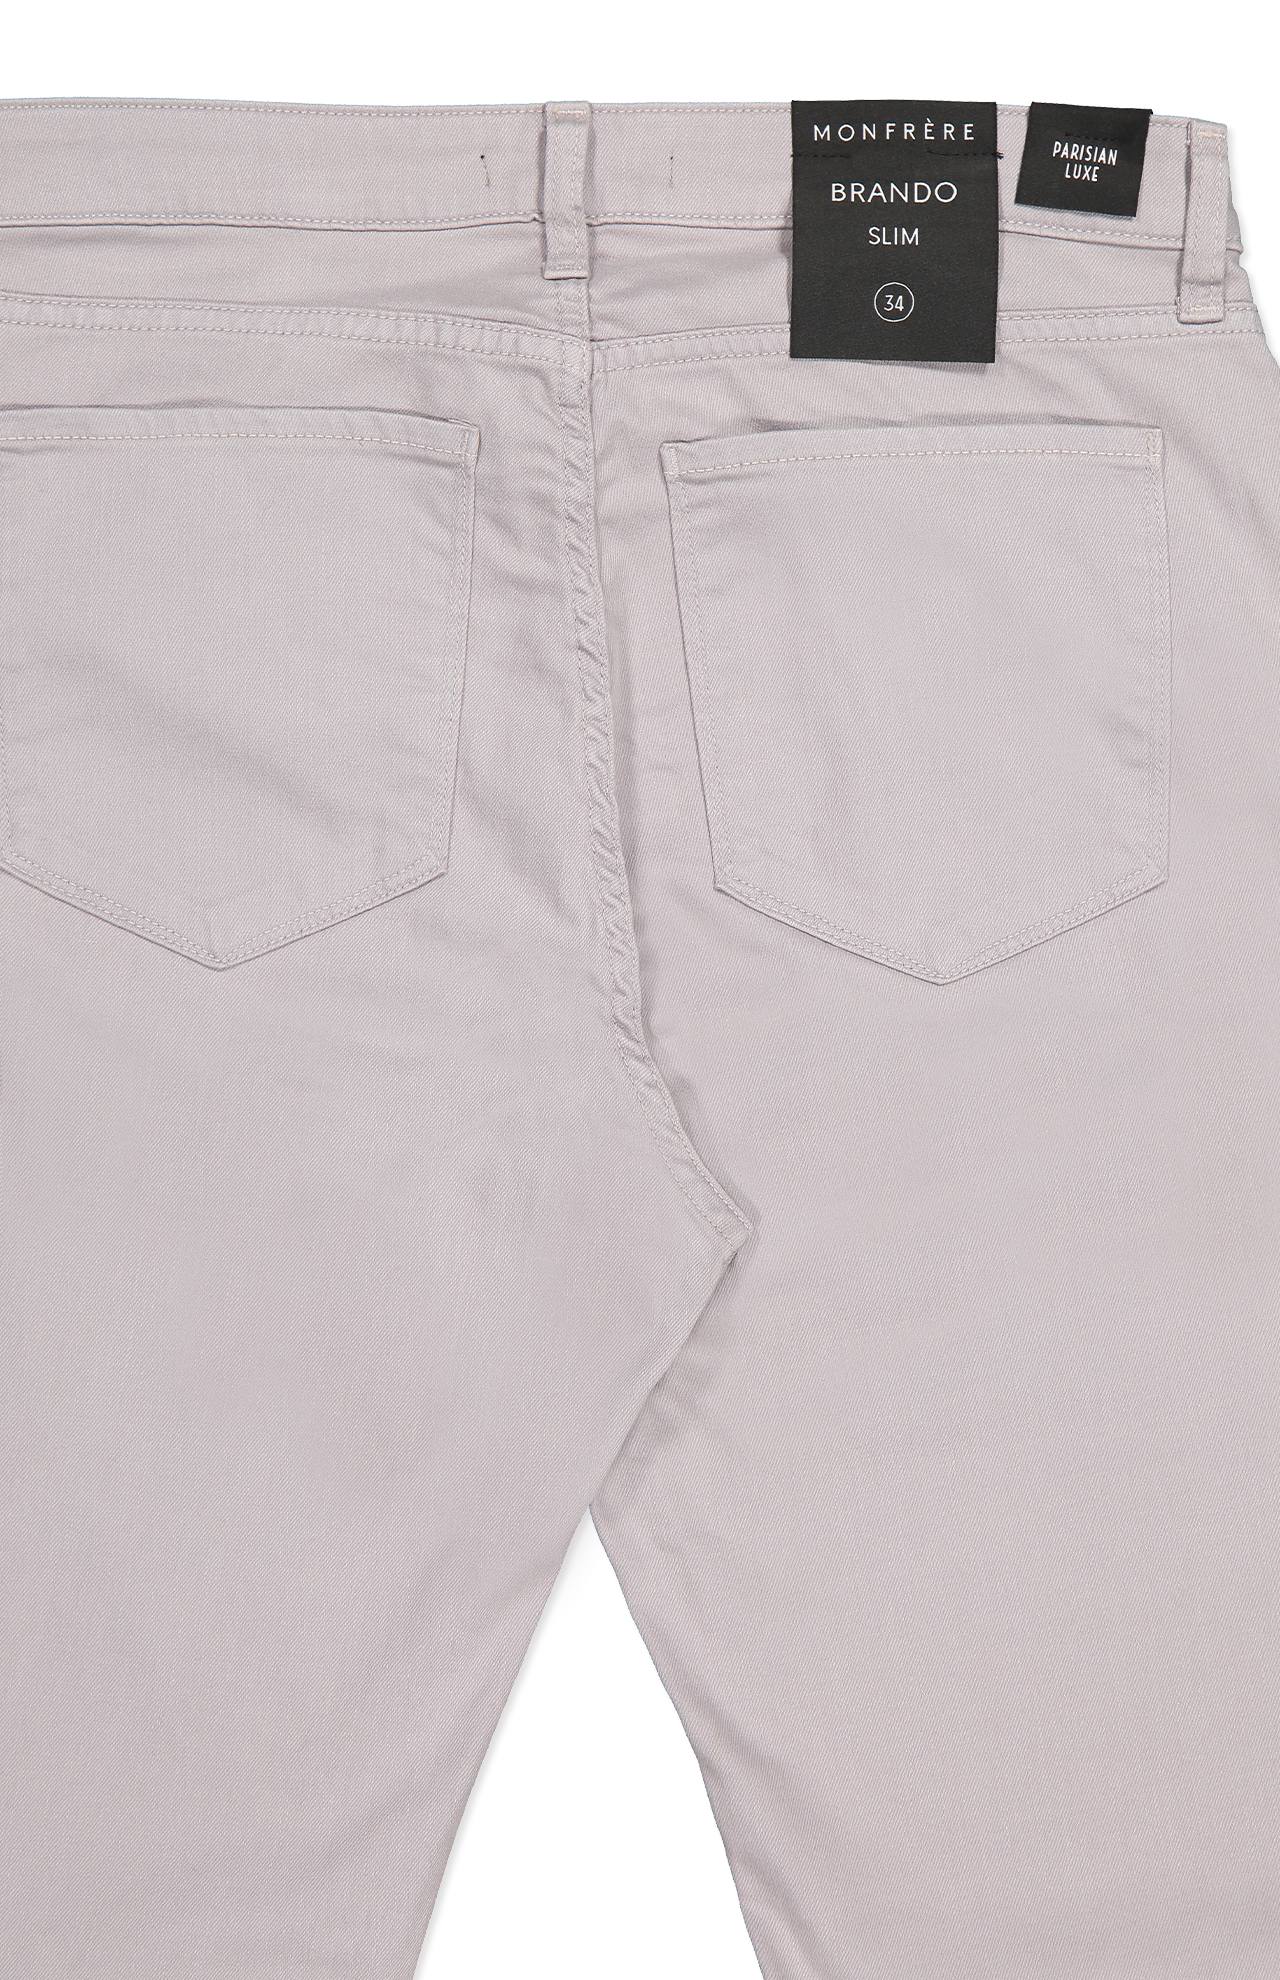 Monfrere Brando Jean Light Grey Back Pocket Detail Image  (7019686101107)